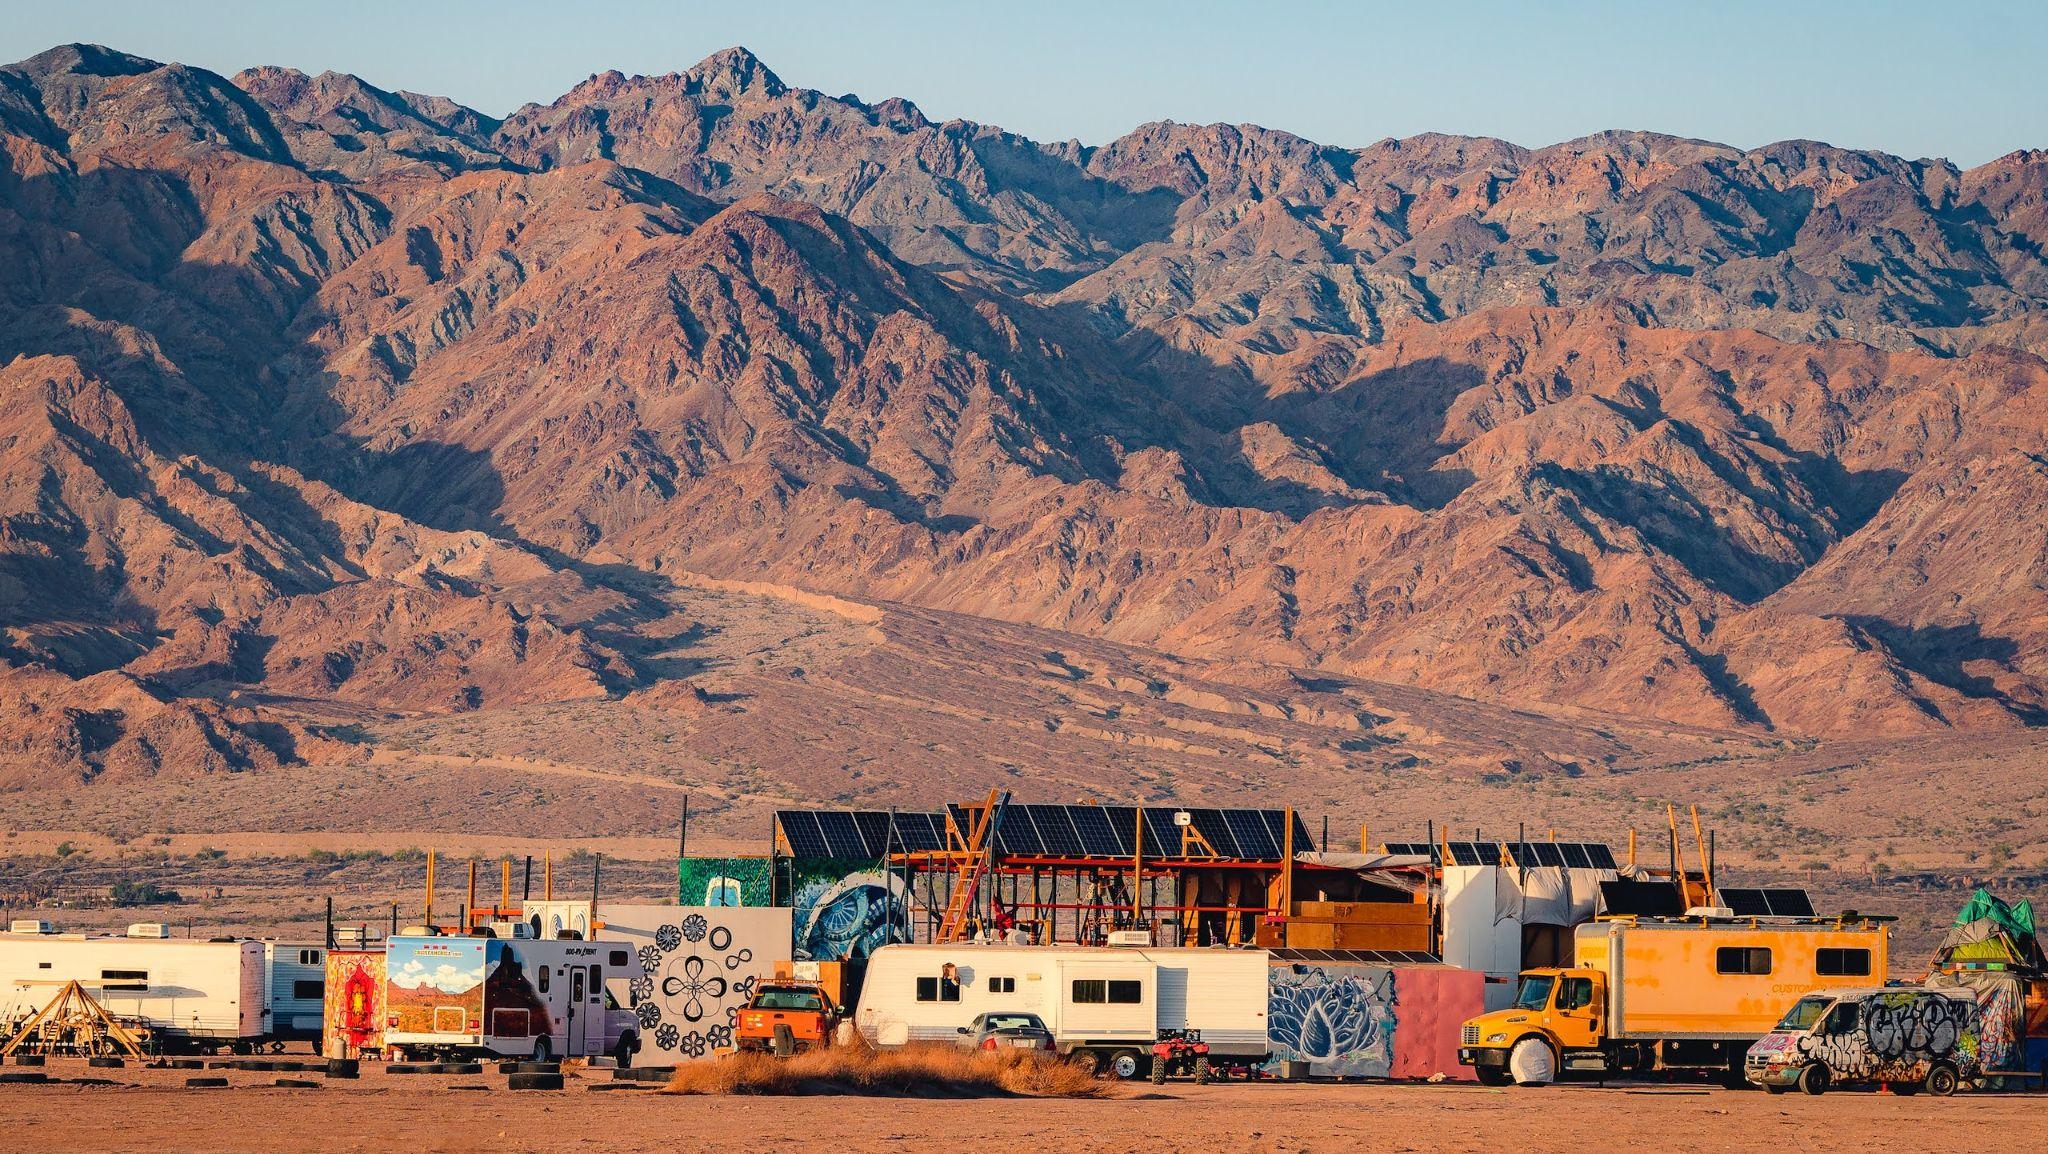 A landscape shot of several caravans set against a large desert mountain backdrop